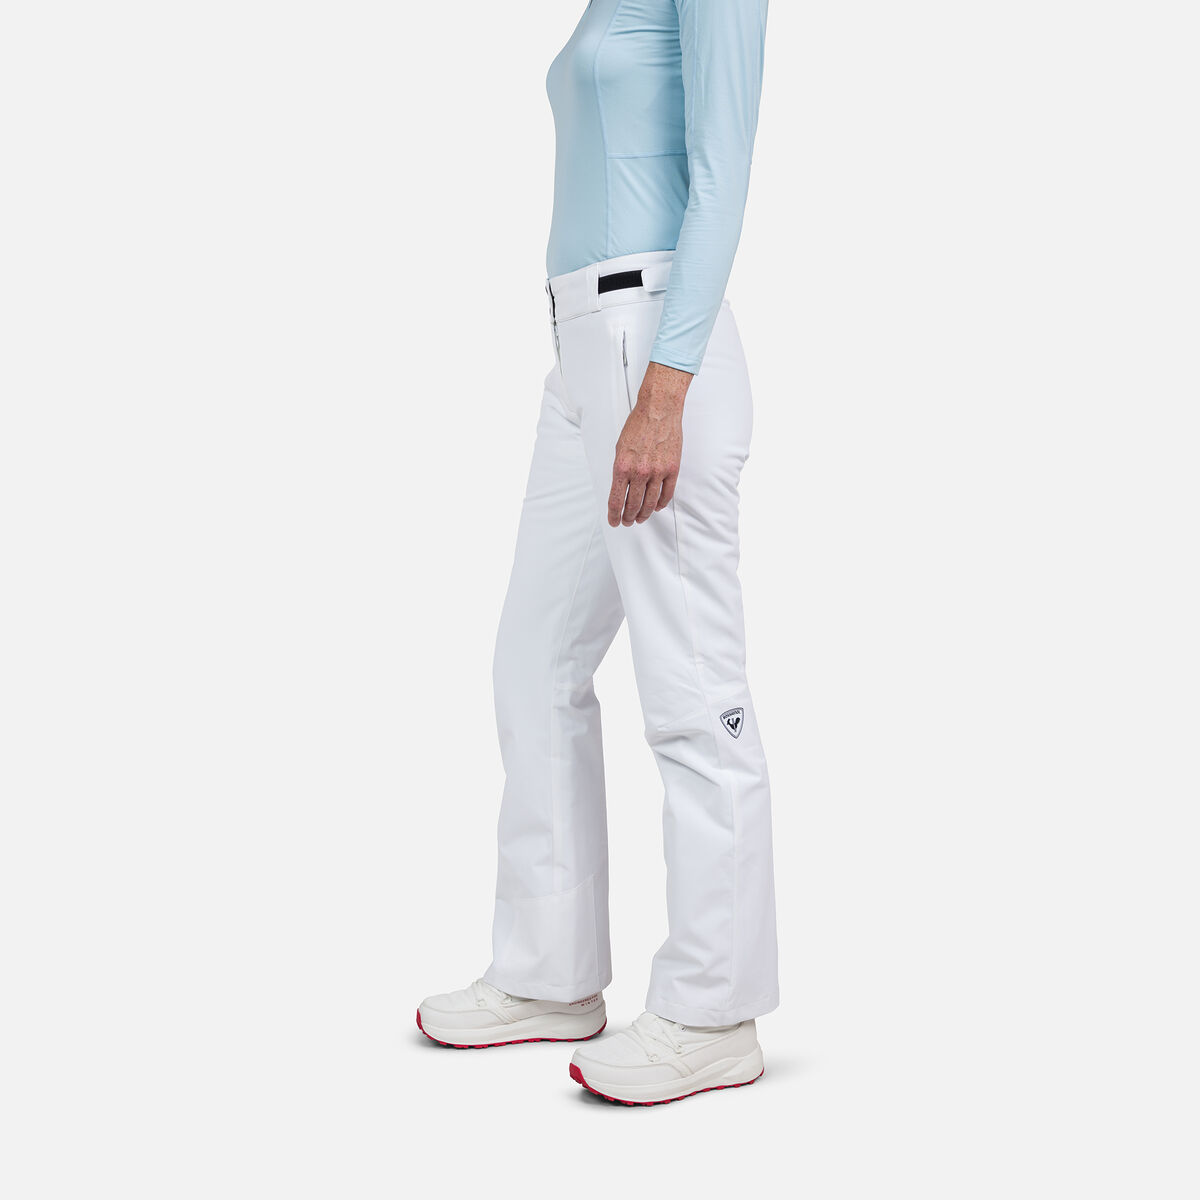 Rossignol Women's Staci Ski Pants White